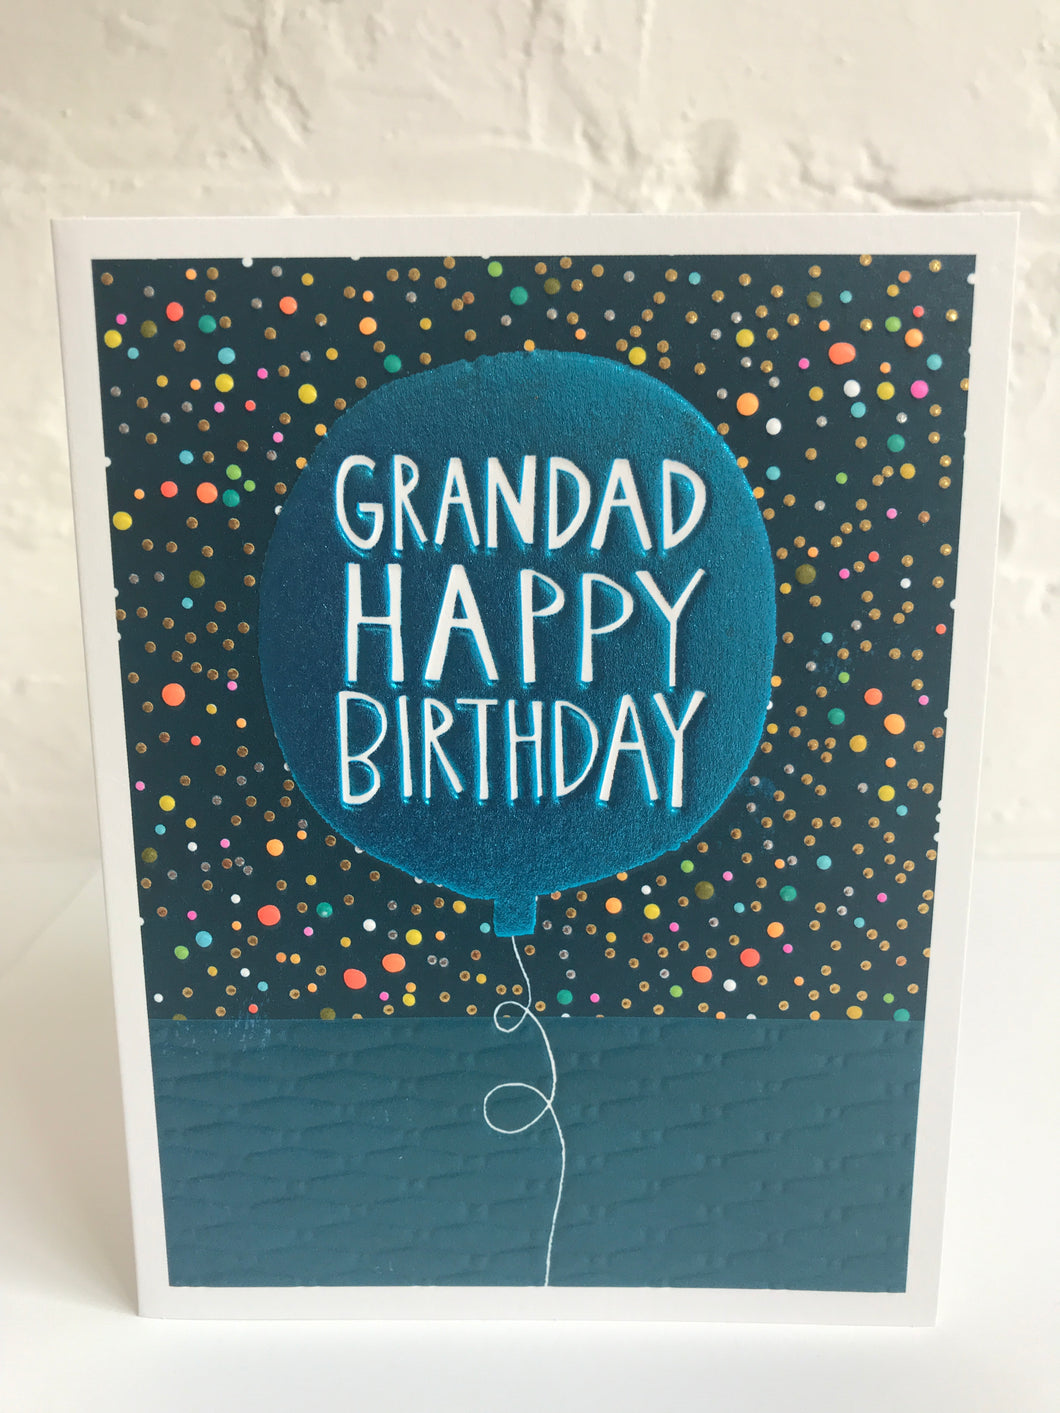 Happy Birthday Grandad - The Alresford Gift Shop